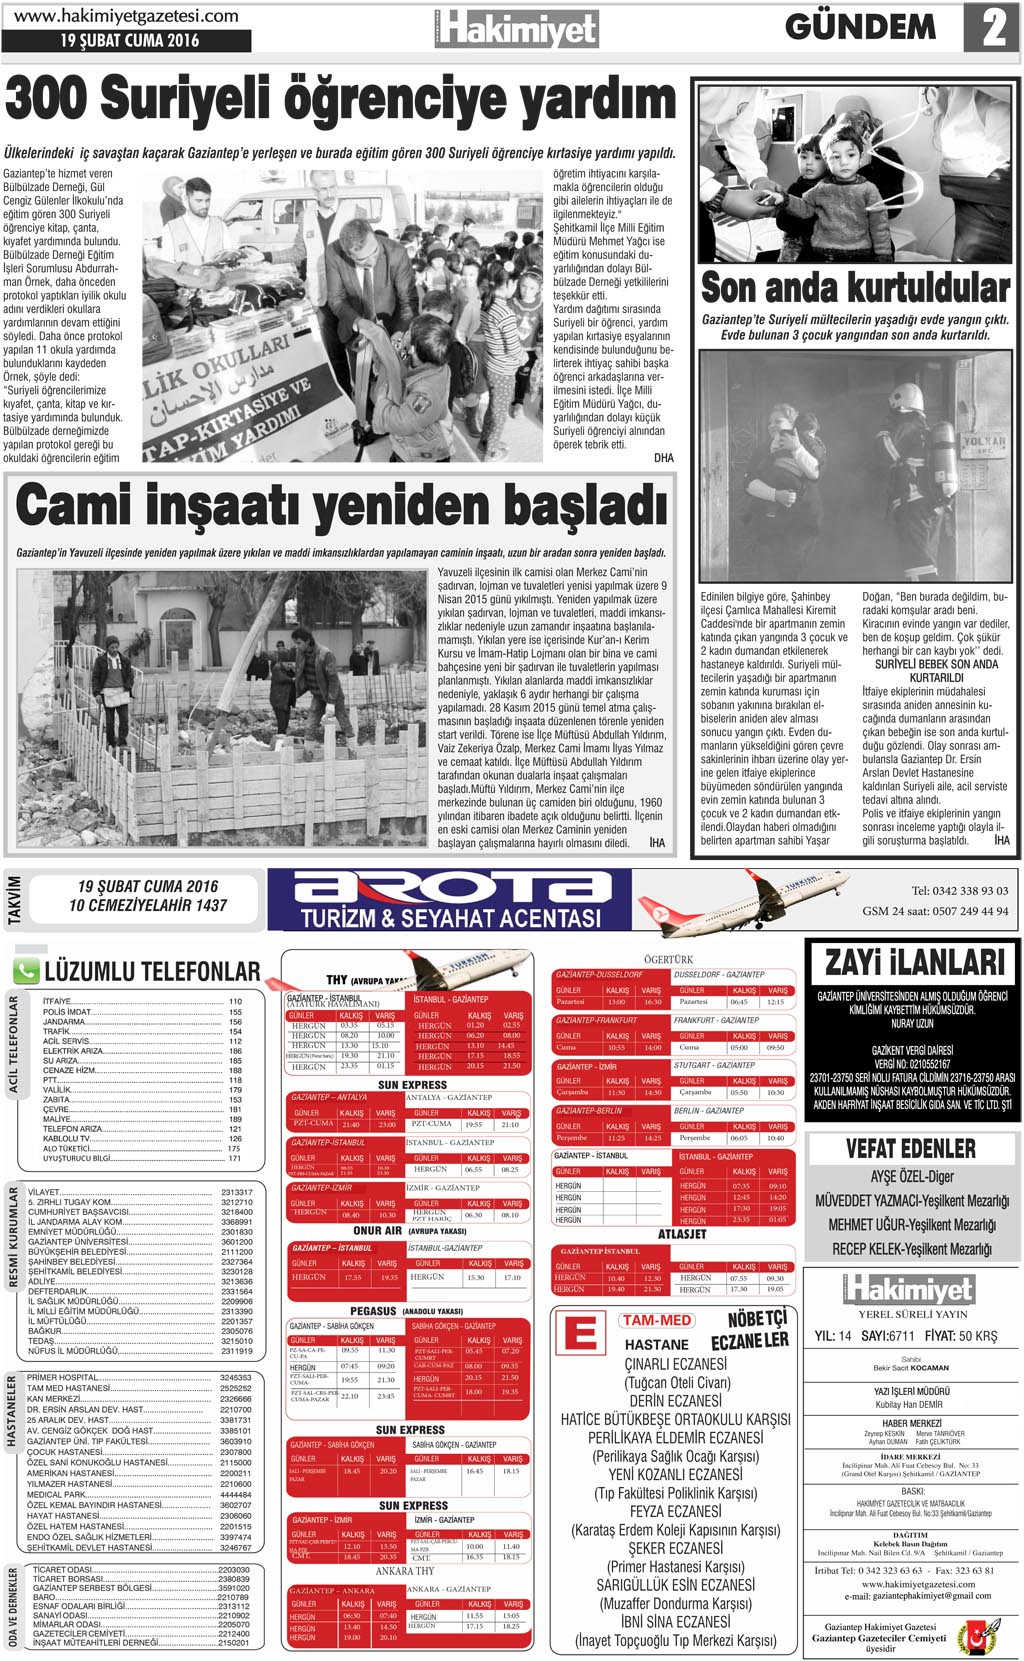 Beşiktaş - Gaziantepspor karşılaşması